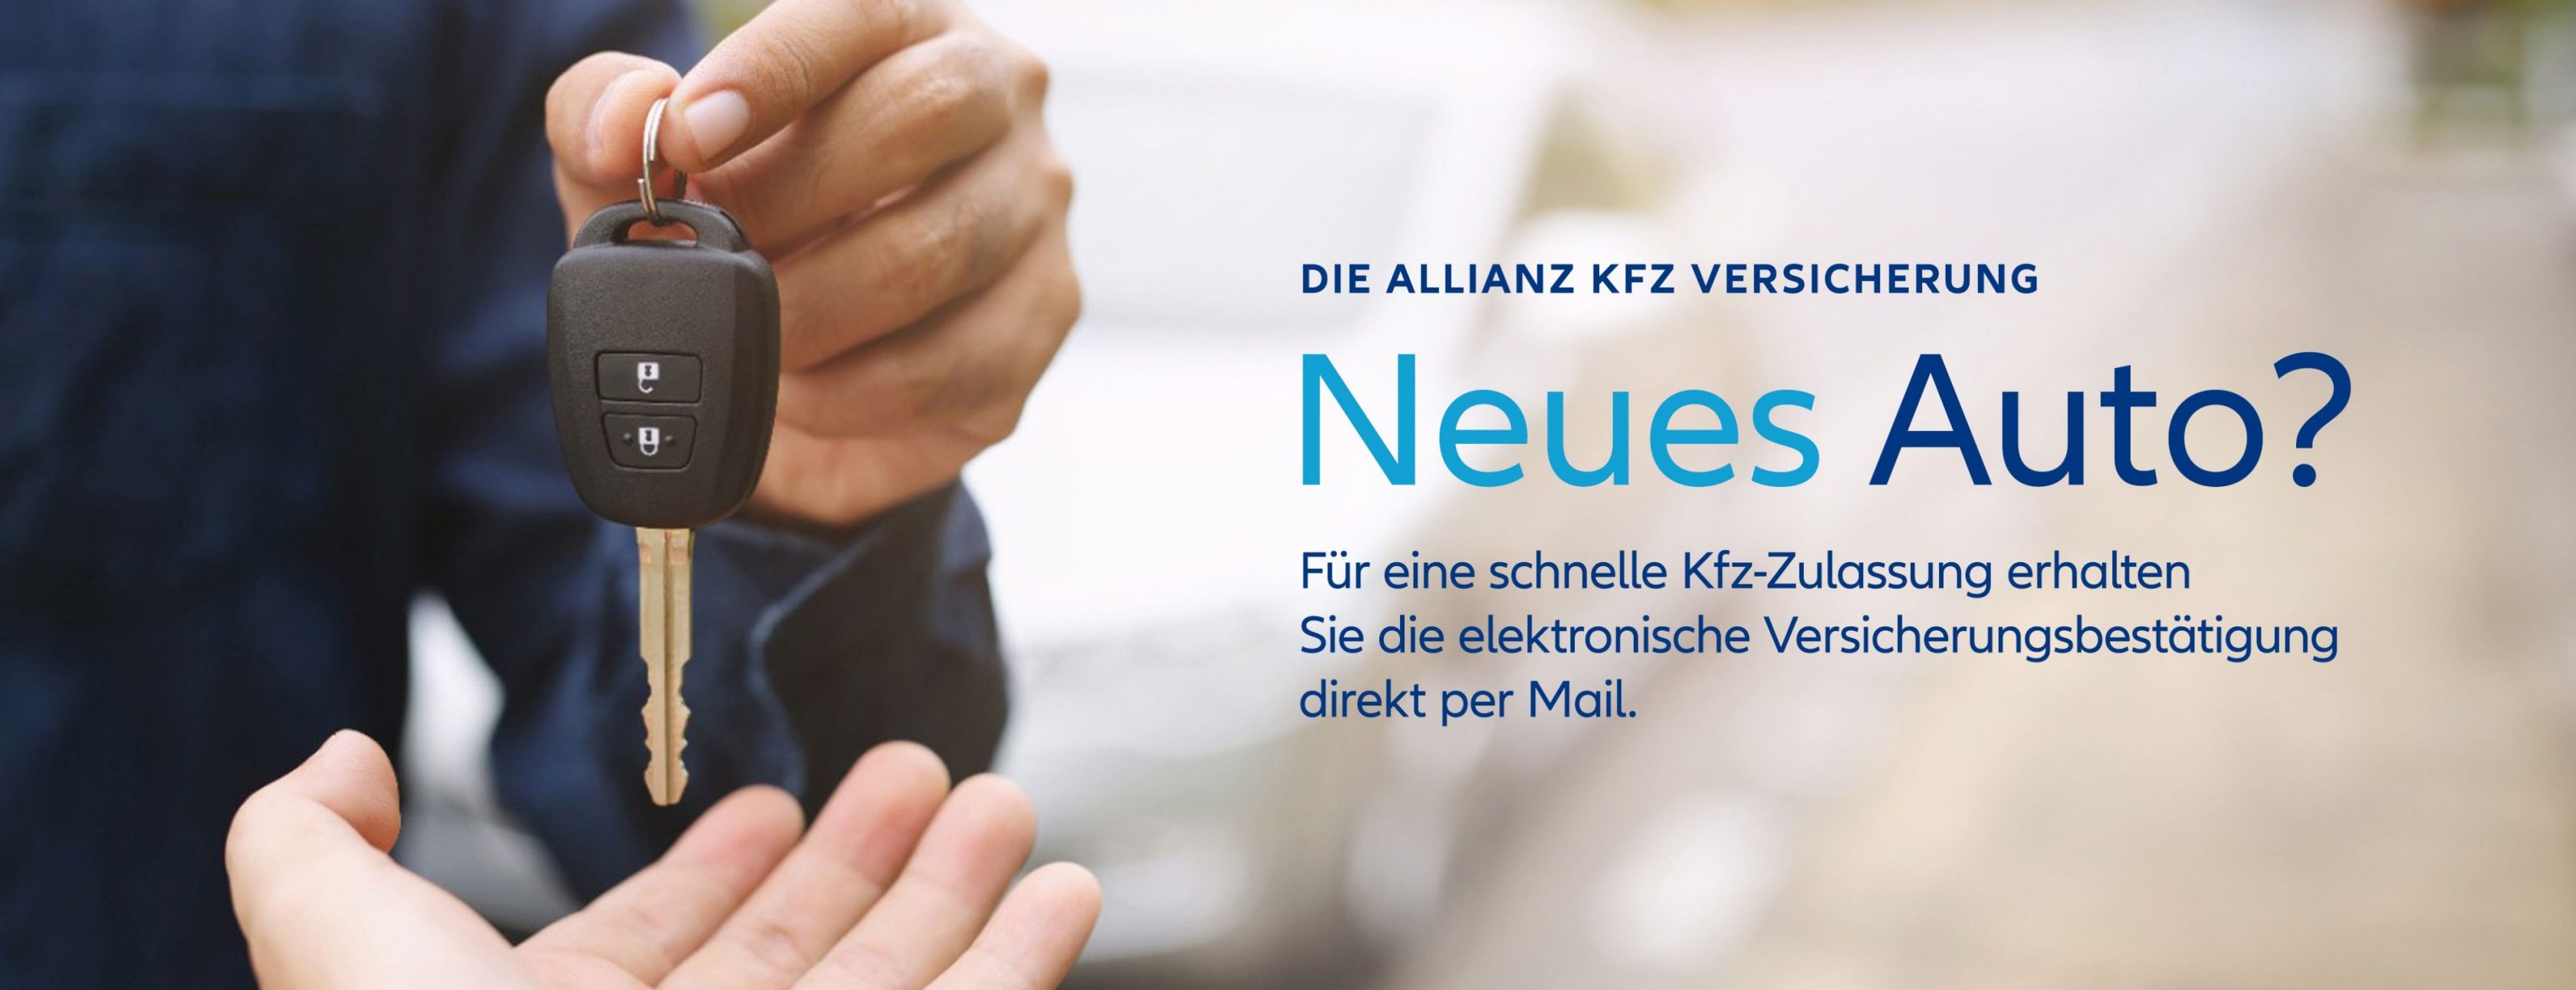 Allianz Versicherung Andreas Neufert Kiel - Allianz Andreas Neufert Kfz Versicherung